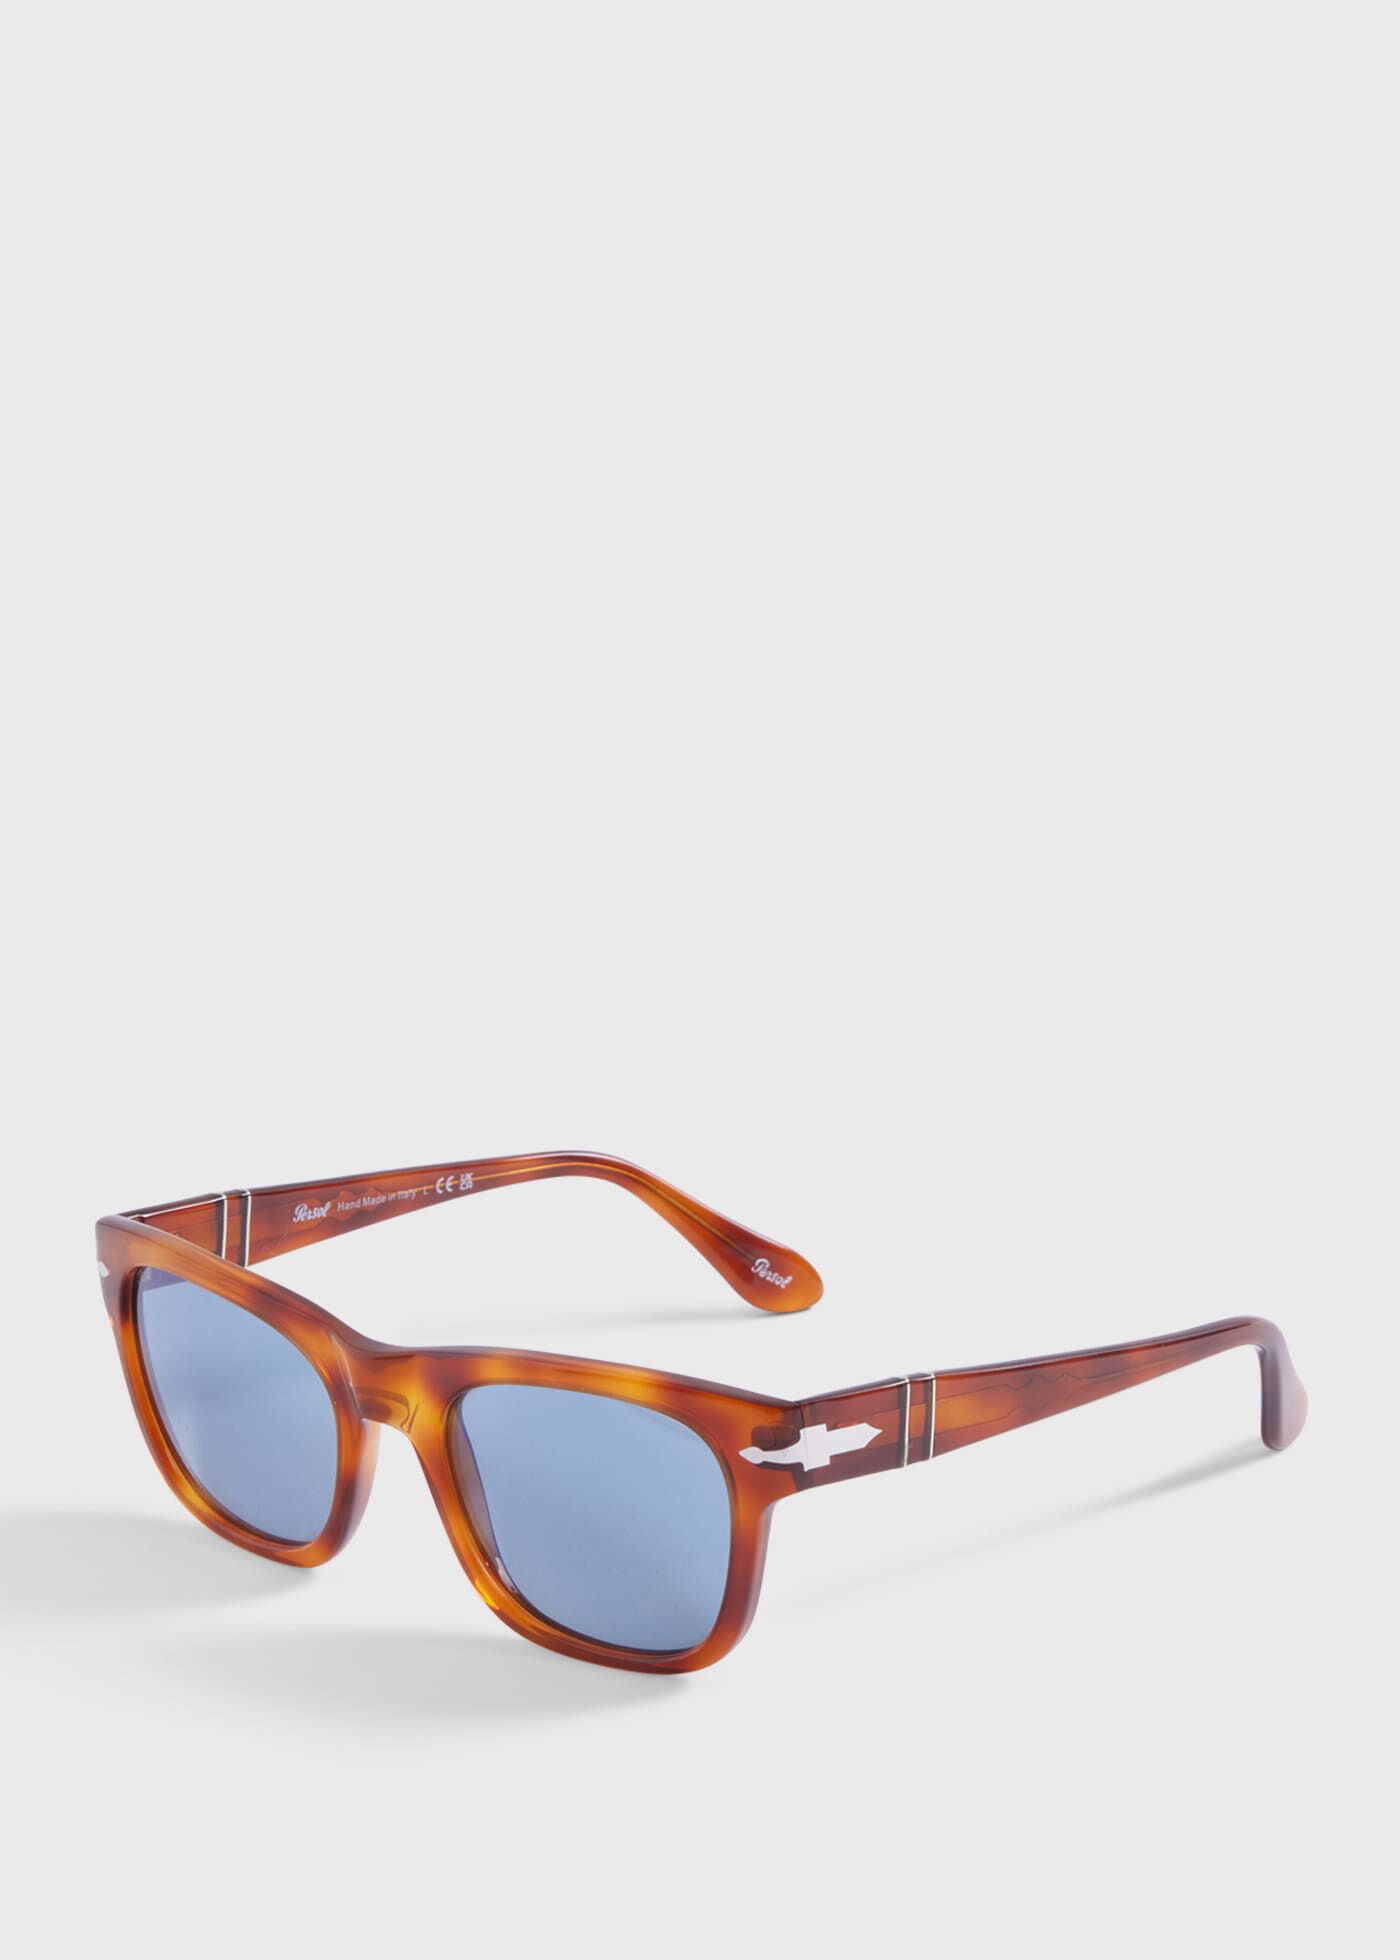 Persol Grey Gradient Rectangular Men's Sunglasses PO3048S 181/71 55  8056597313650 - Sunglasses - Jomashop